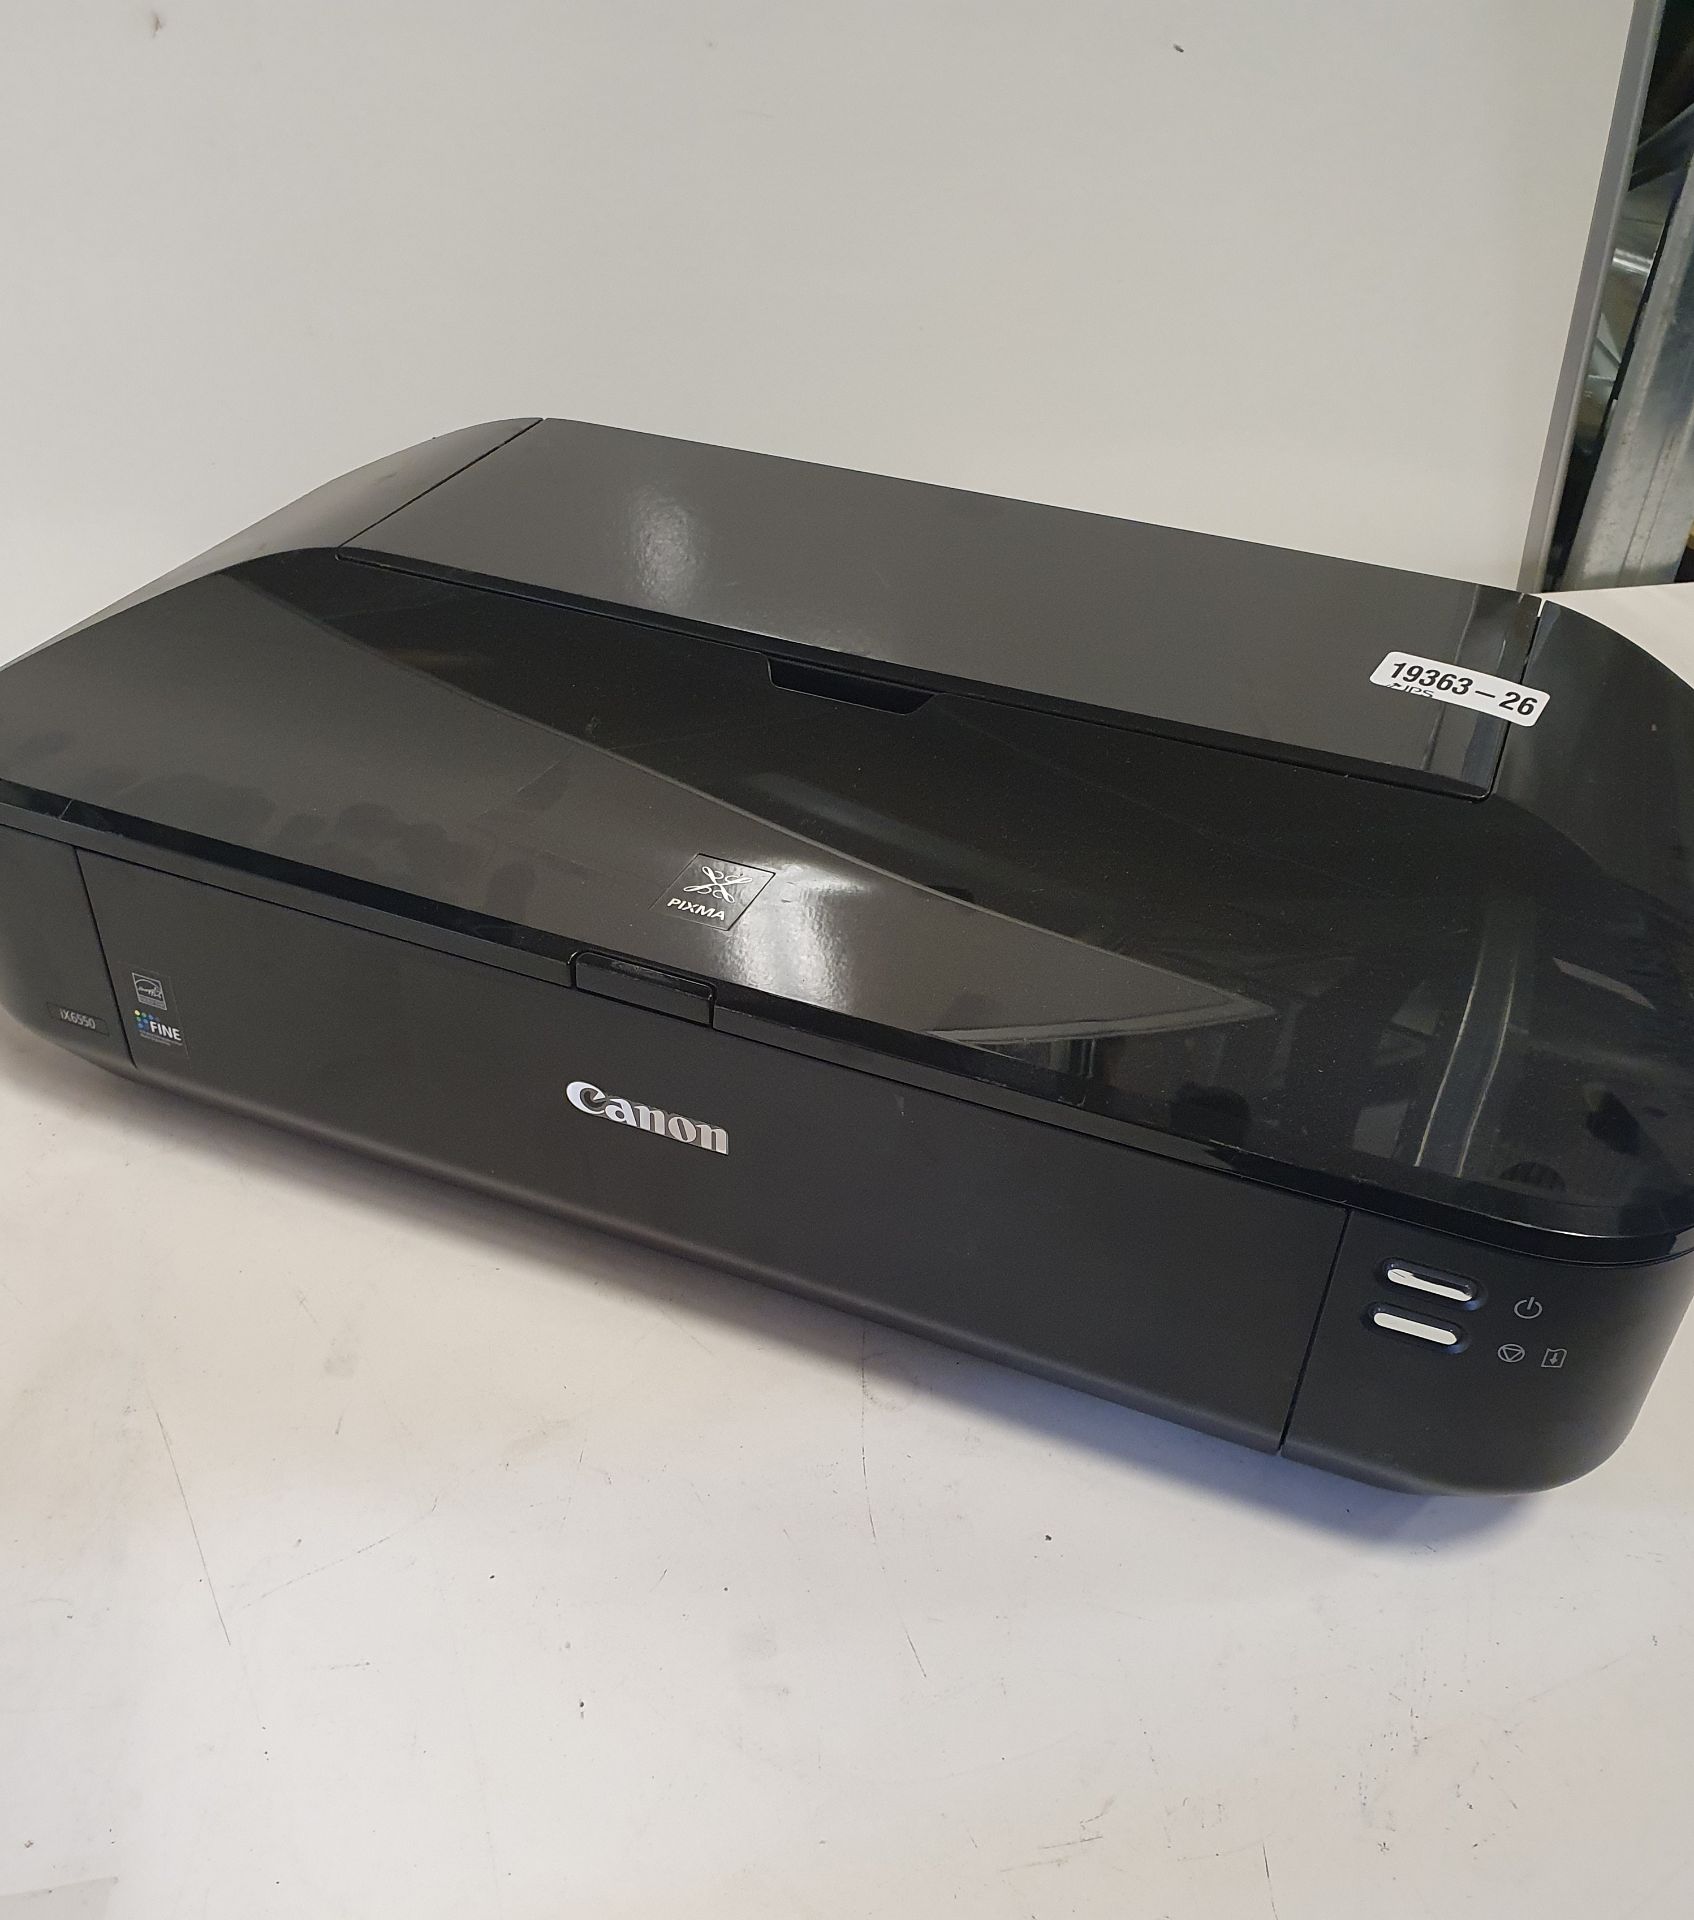 Canon iX6550 laser jet printer